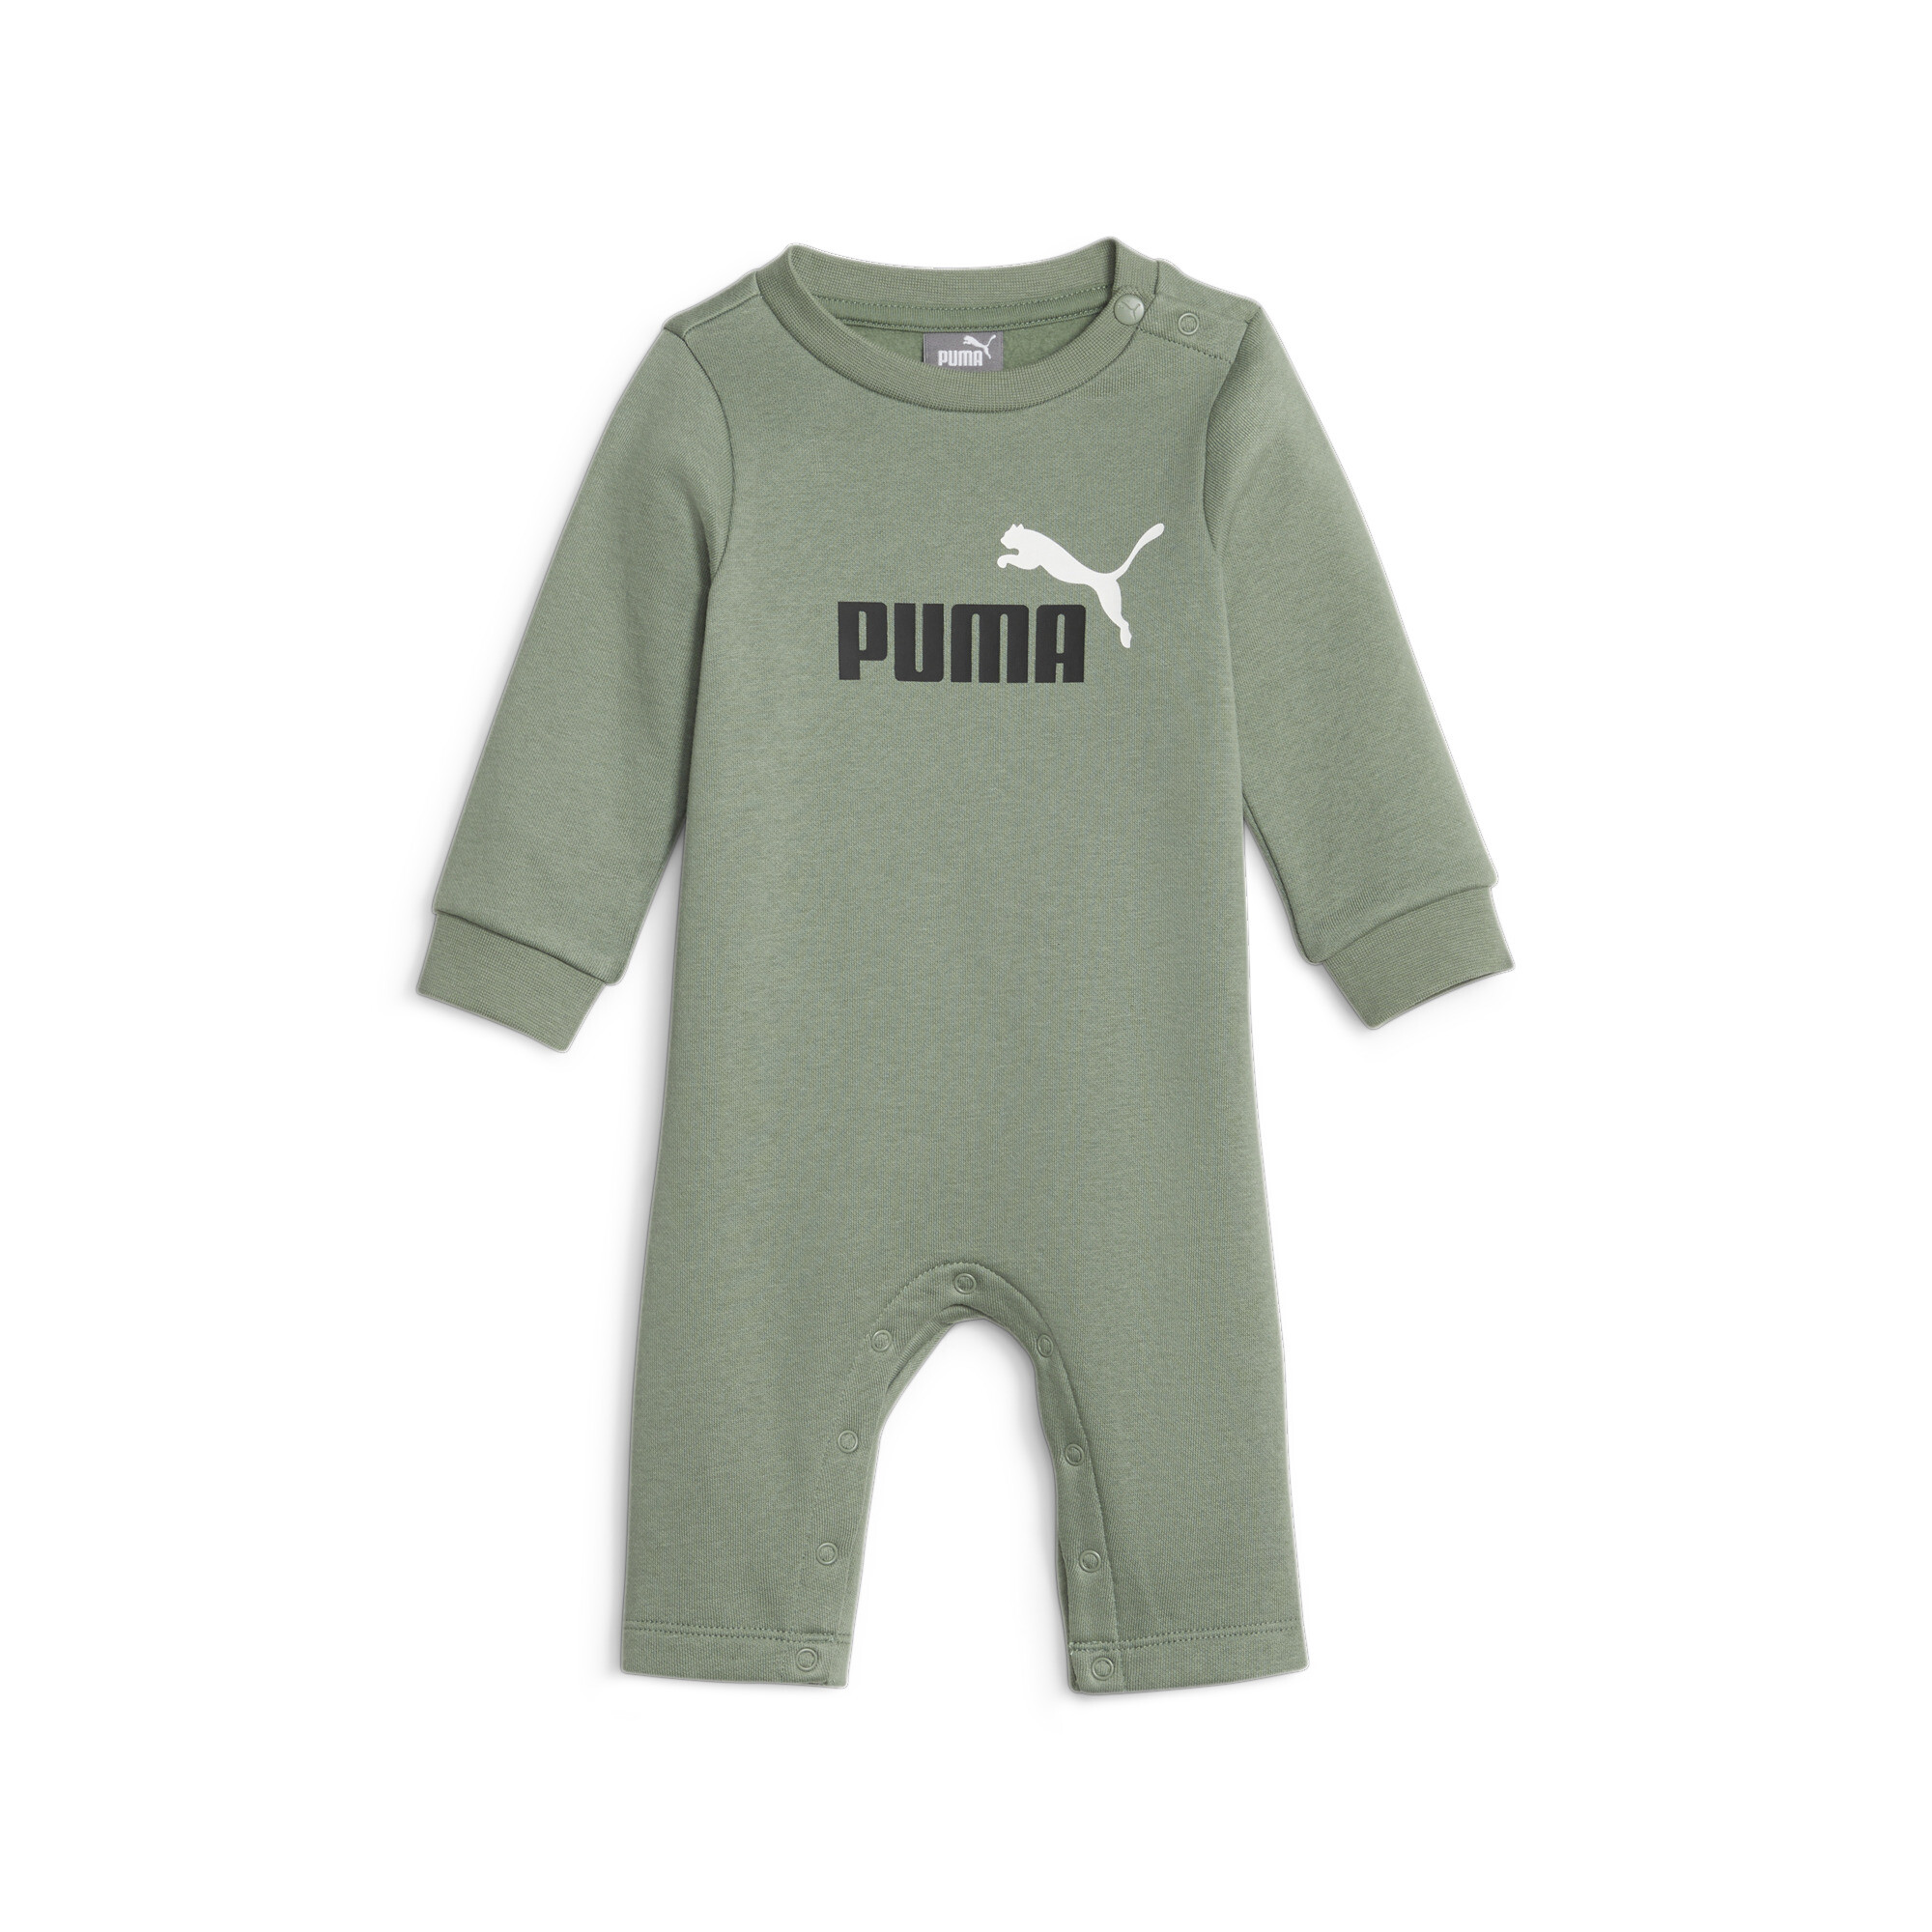 Puma Minicats Newborn Coverall Babies, Green, Size 9-12M, Clothing